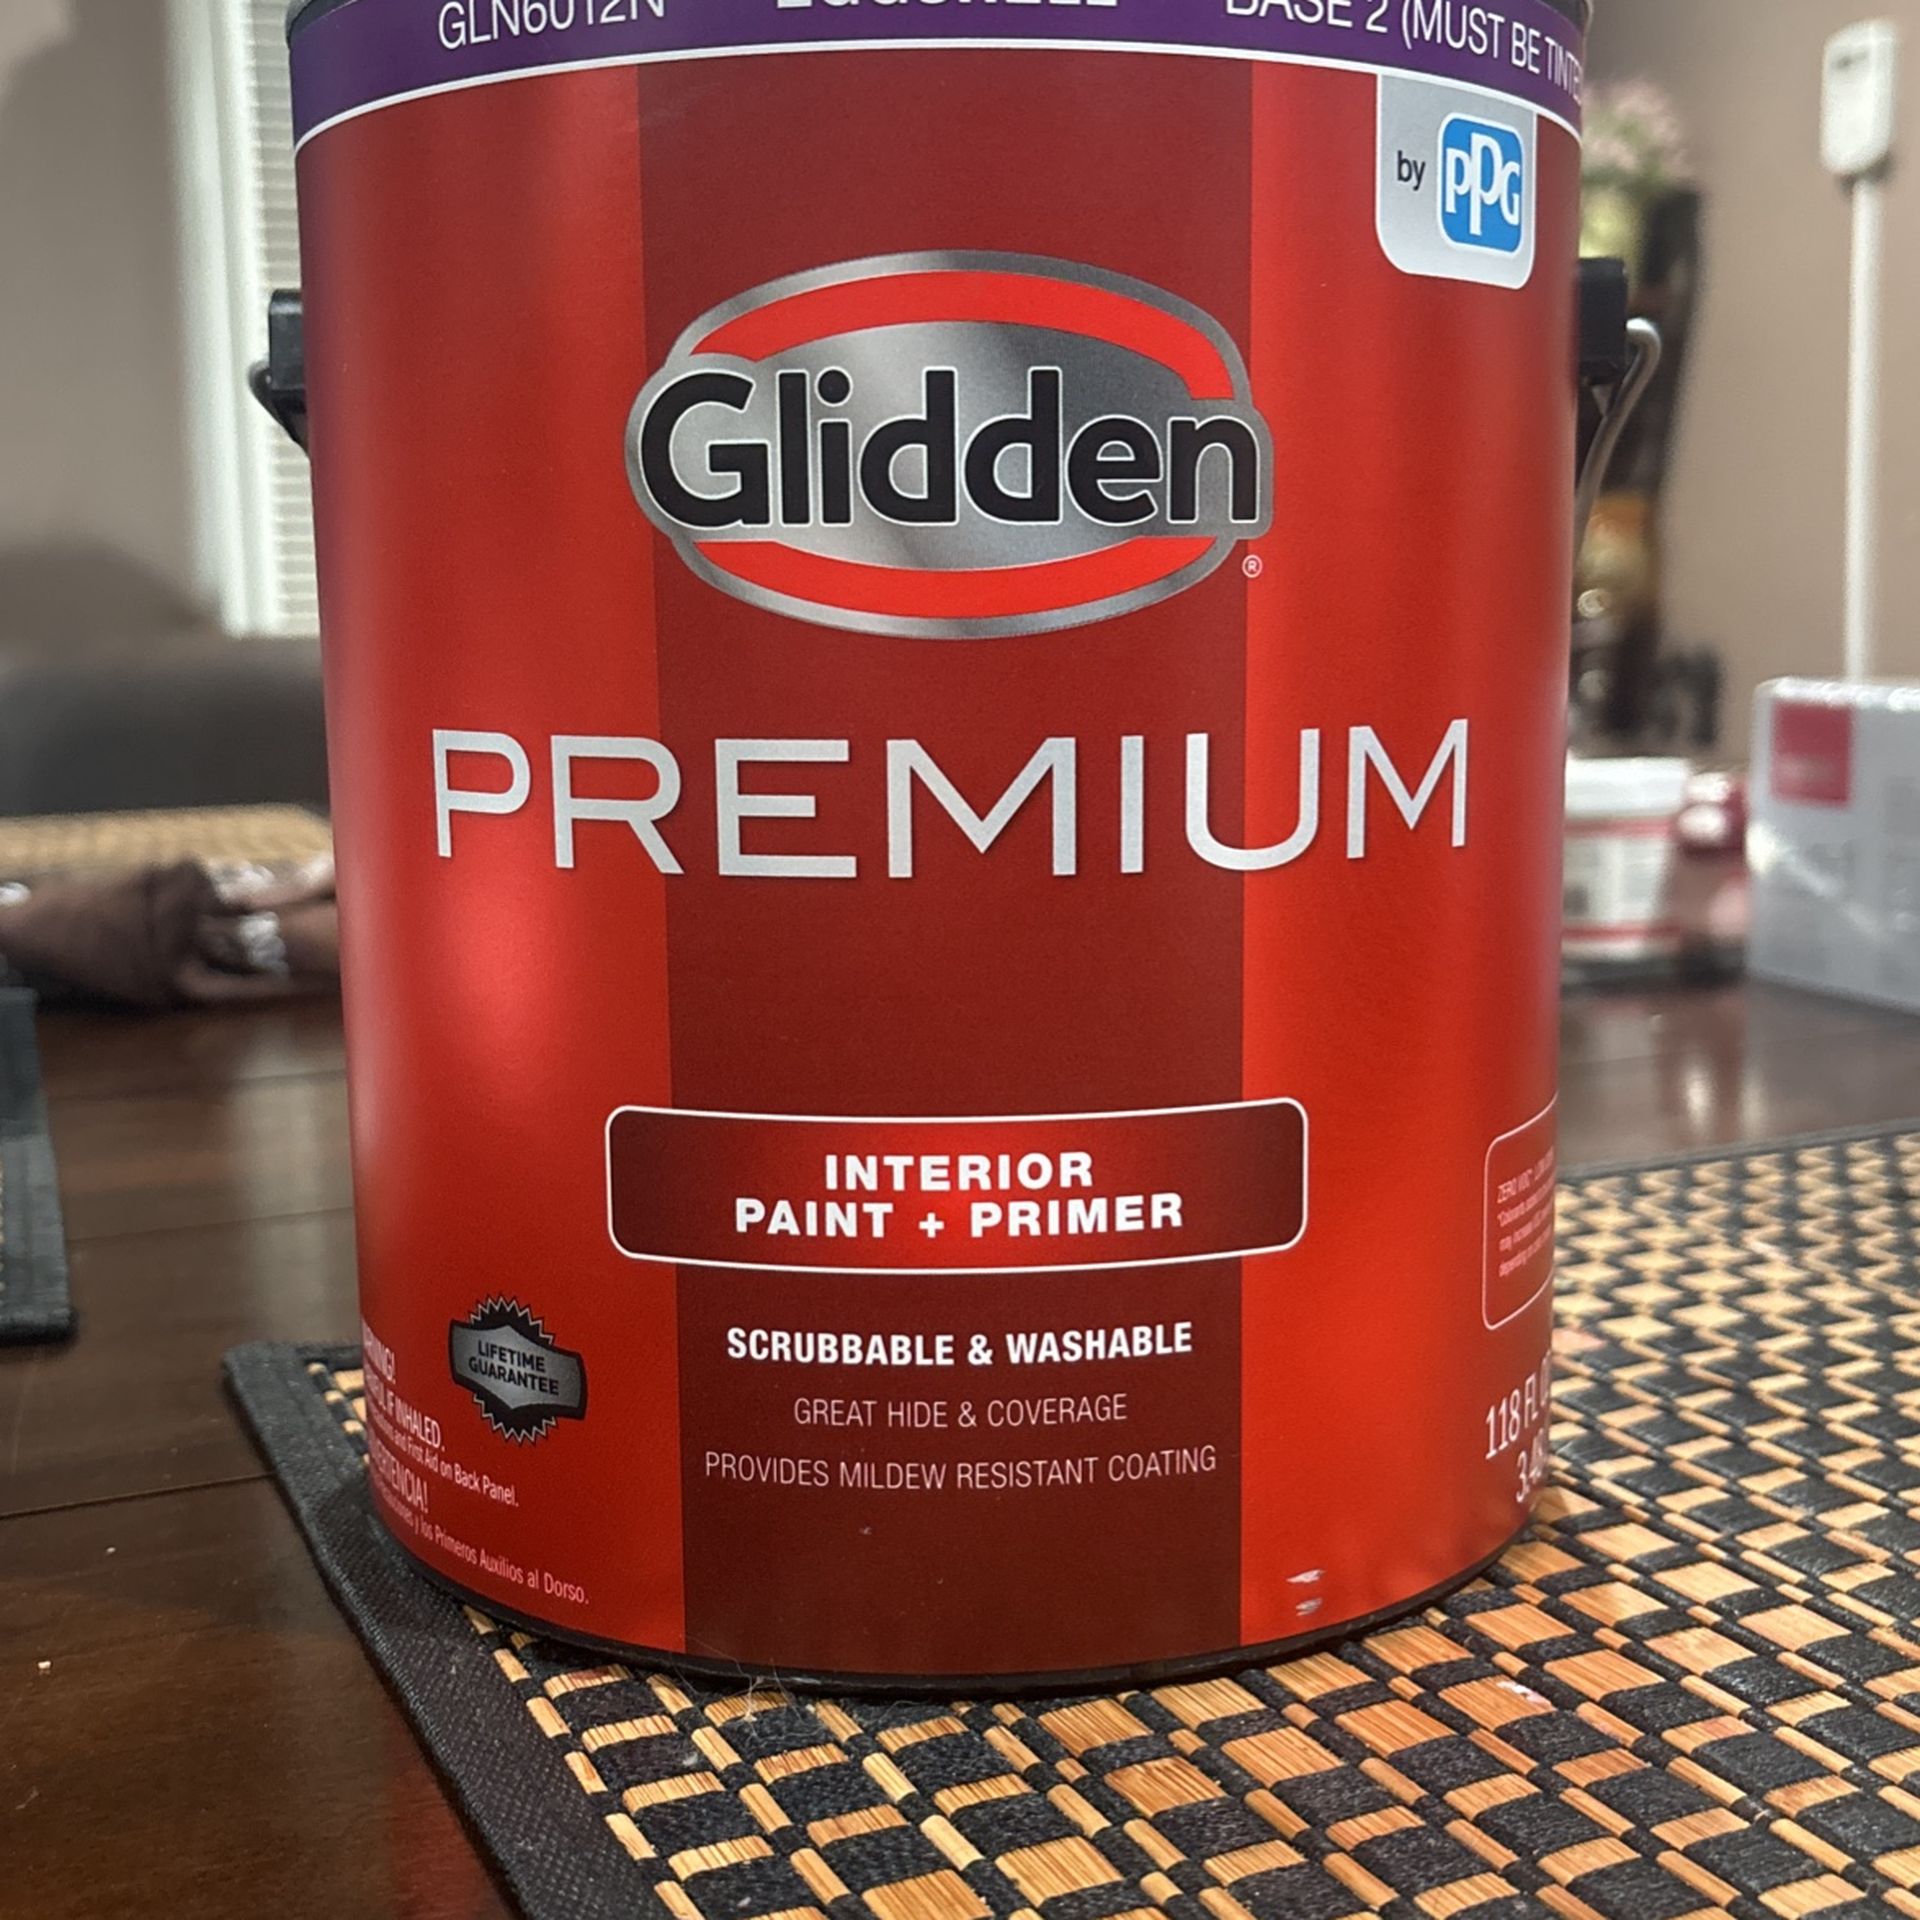 Glidden Premium Paint